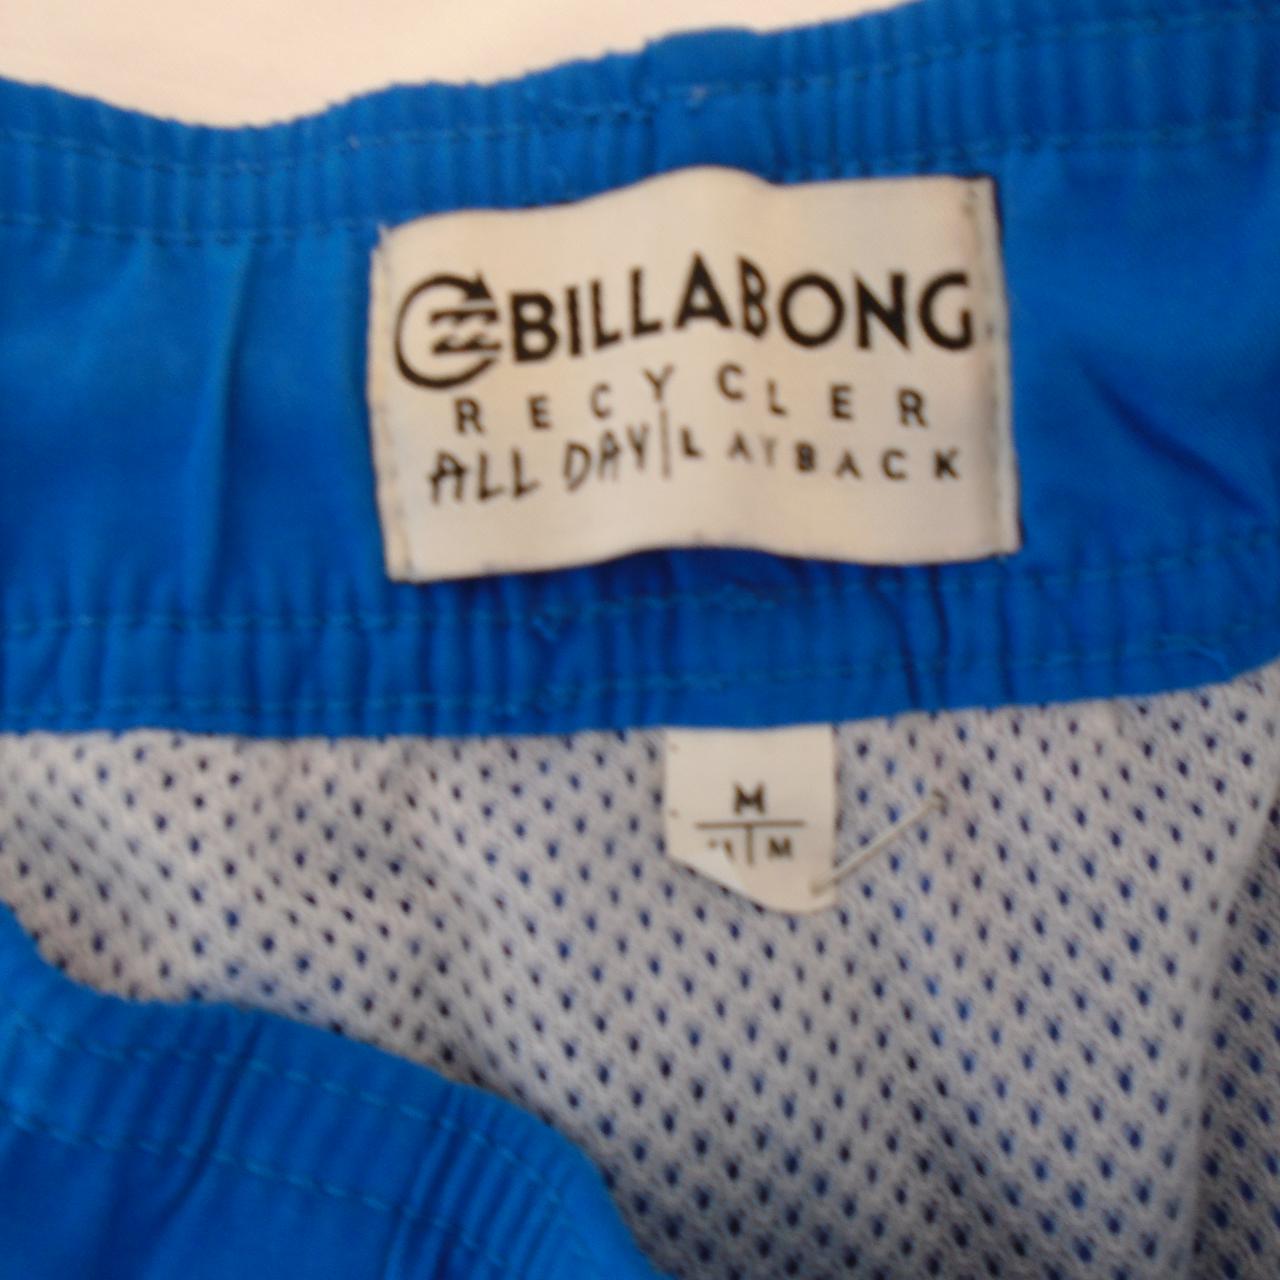 Pantalones cortos para hombre Billabong. Azul. M. Usado. Bien